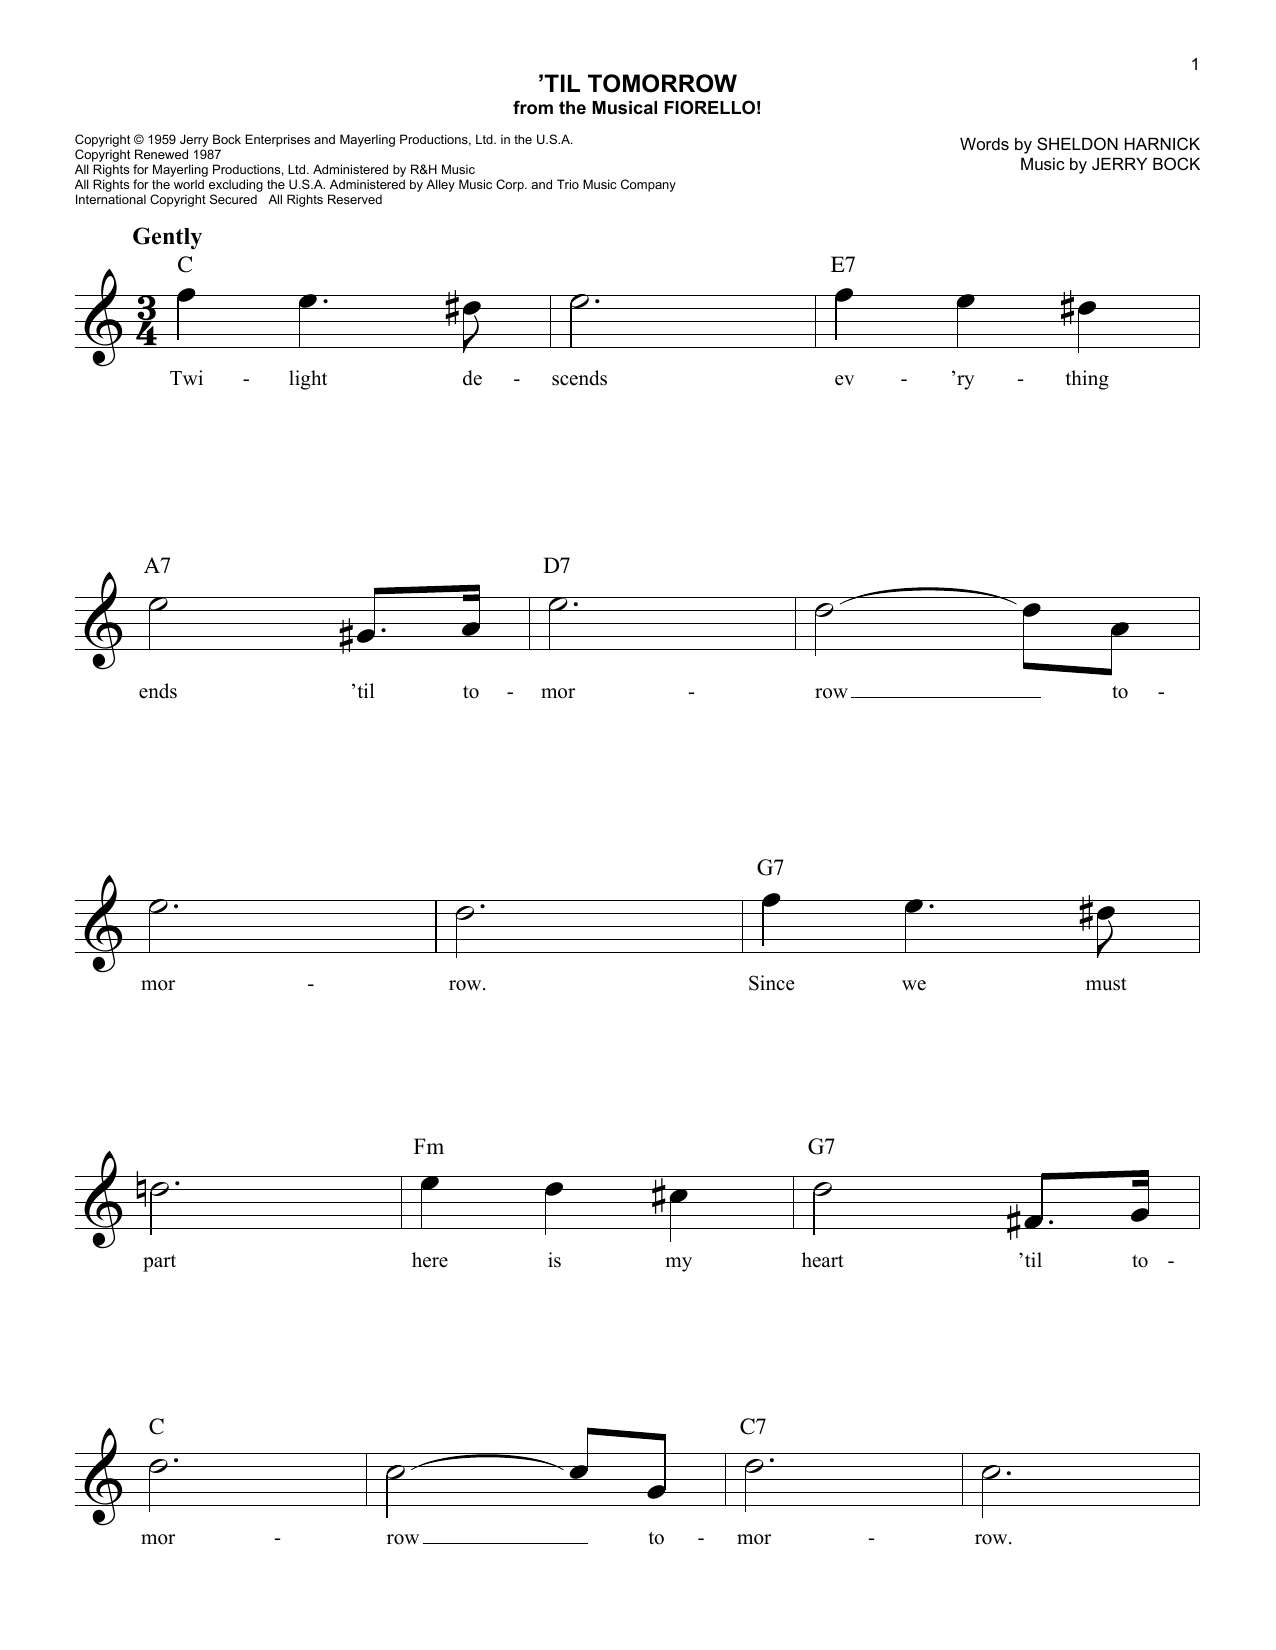 Sheldon Harnick 'Til Tomorrow Sheet Music Notes & Chords for Lead Sheet / Fake Book - Download or Print PDF